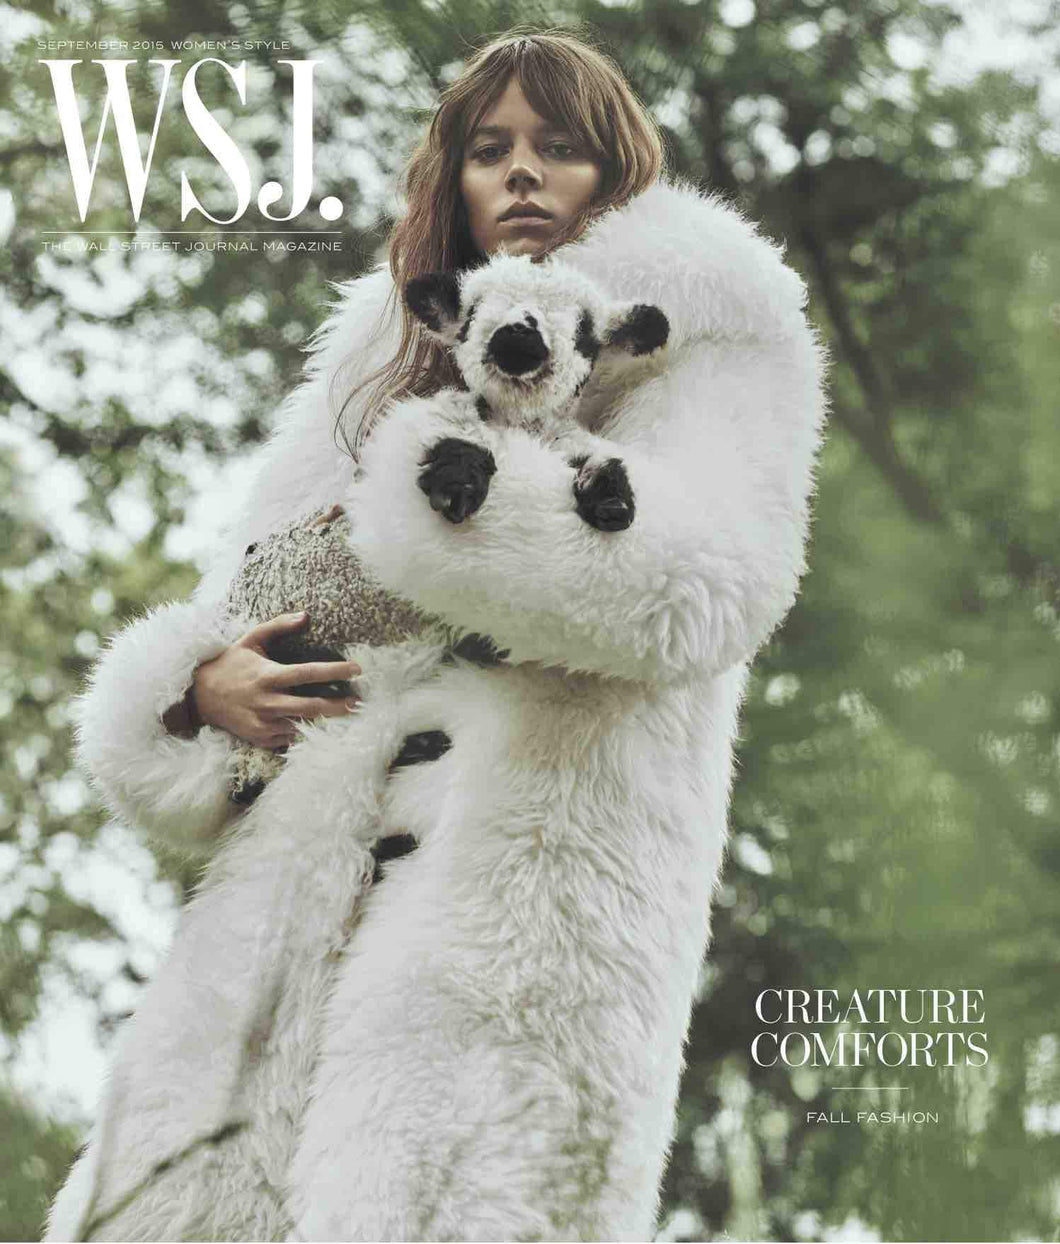 Fall Fashion | WSJ. Magazine, September ( I ) 2015